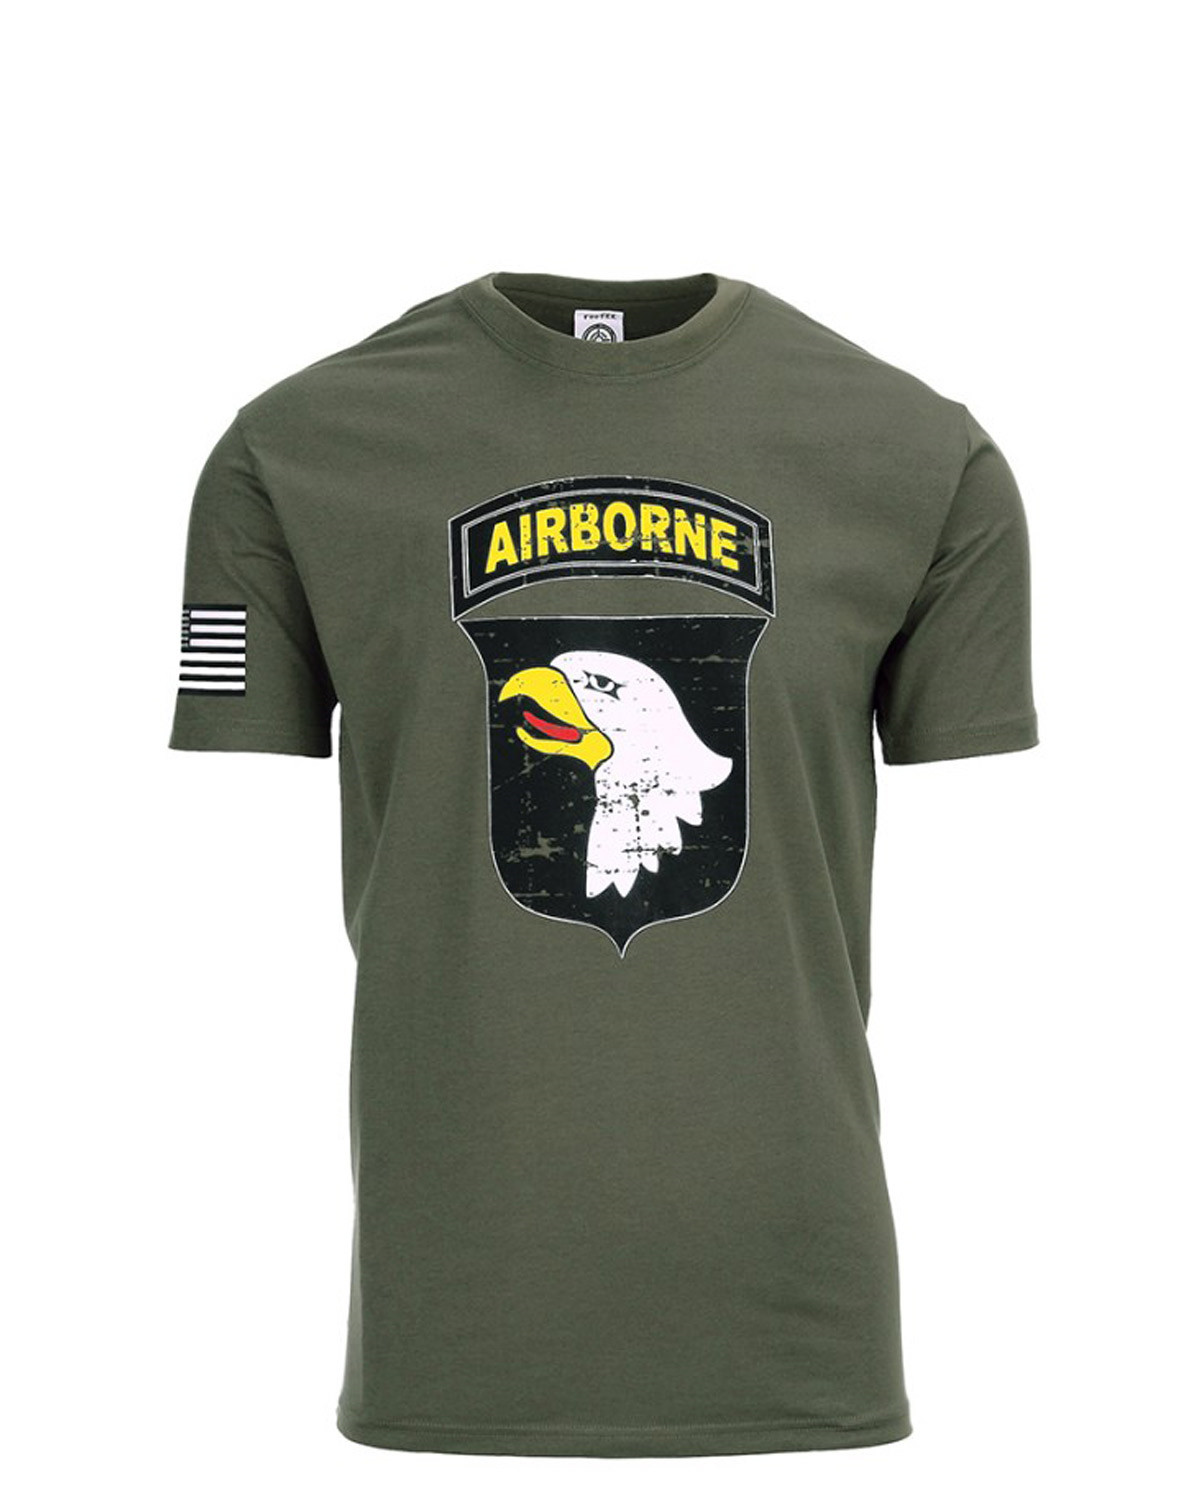 Fostex T-shirt USA 101st Airborne (Grøn, S)